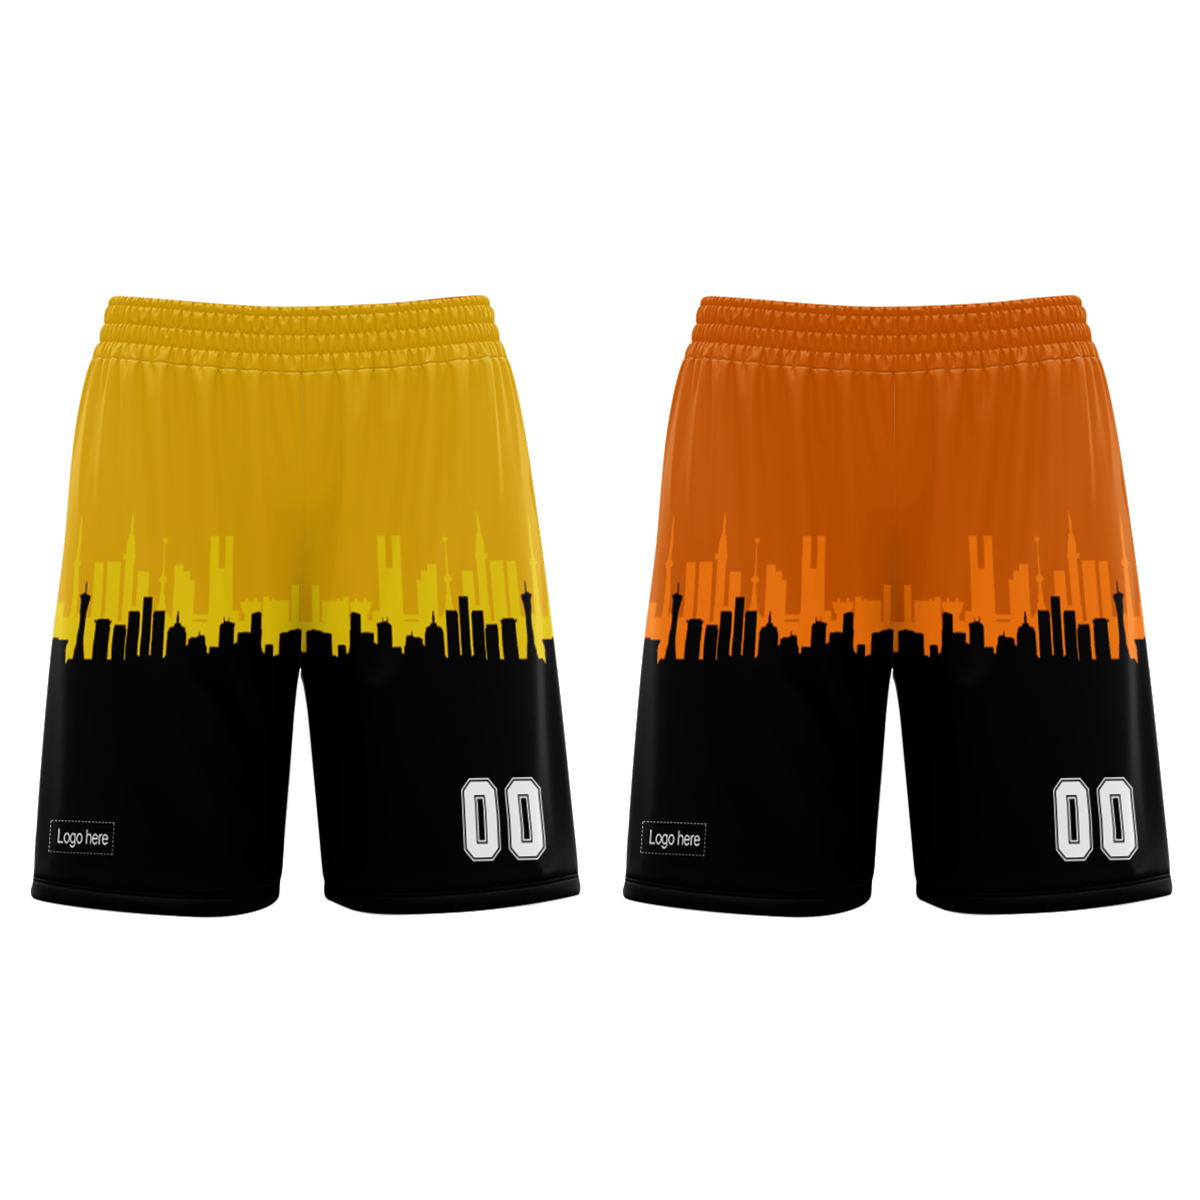 custom-basketball-jerseys-uniforms-print-team-name-number-youth-jersey-set-shirt-shorts-university-game-sports-suit-clothes-at-cj-pod-7